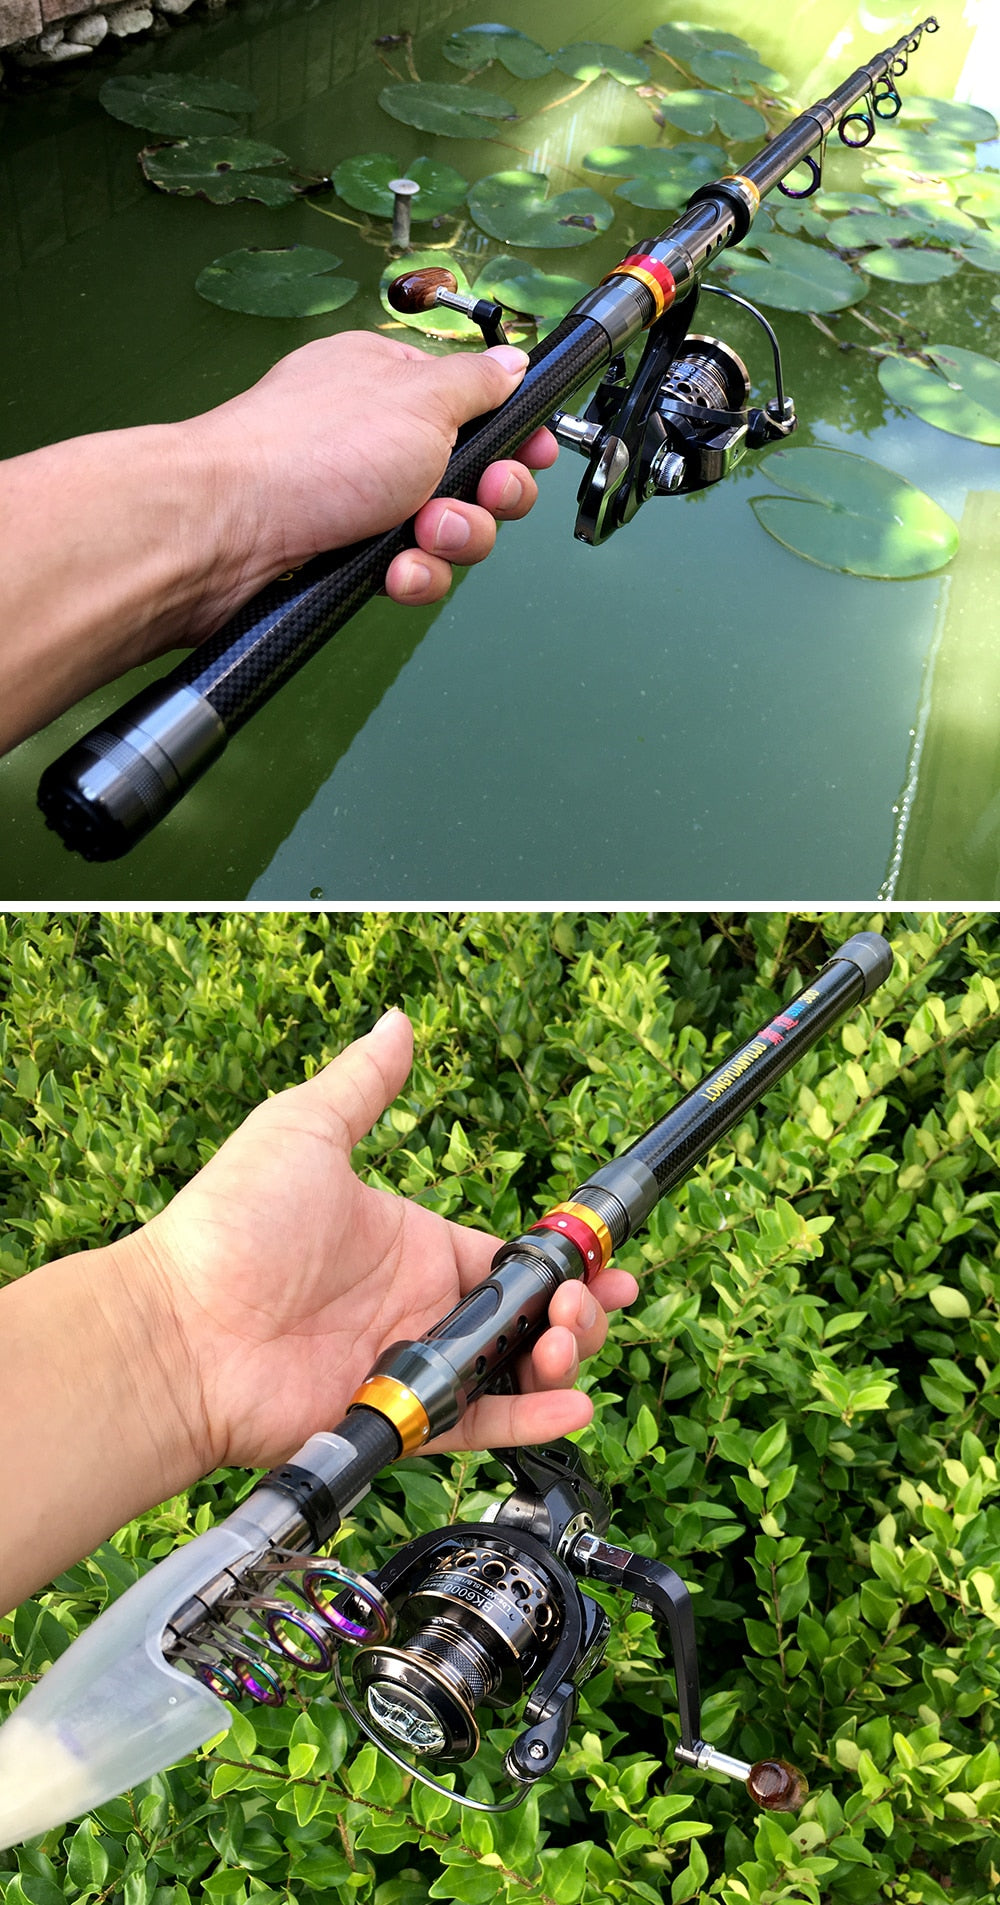 GHOTDA 1.8-3.6m Telescopic Fishing Rod and 5.2:1 Fishing Reel